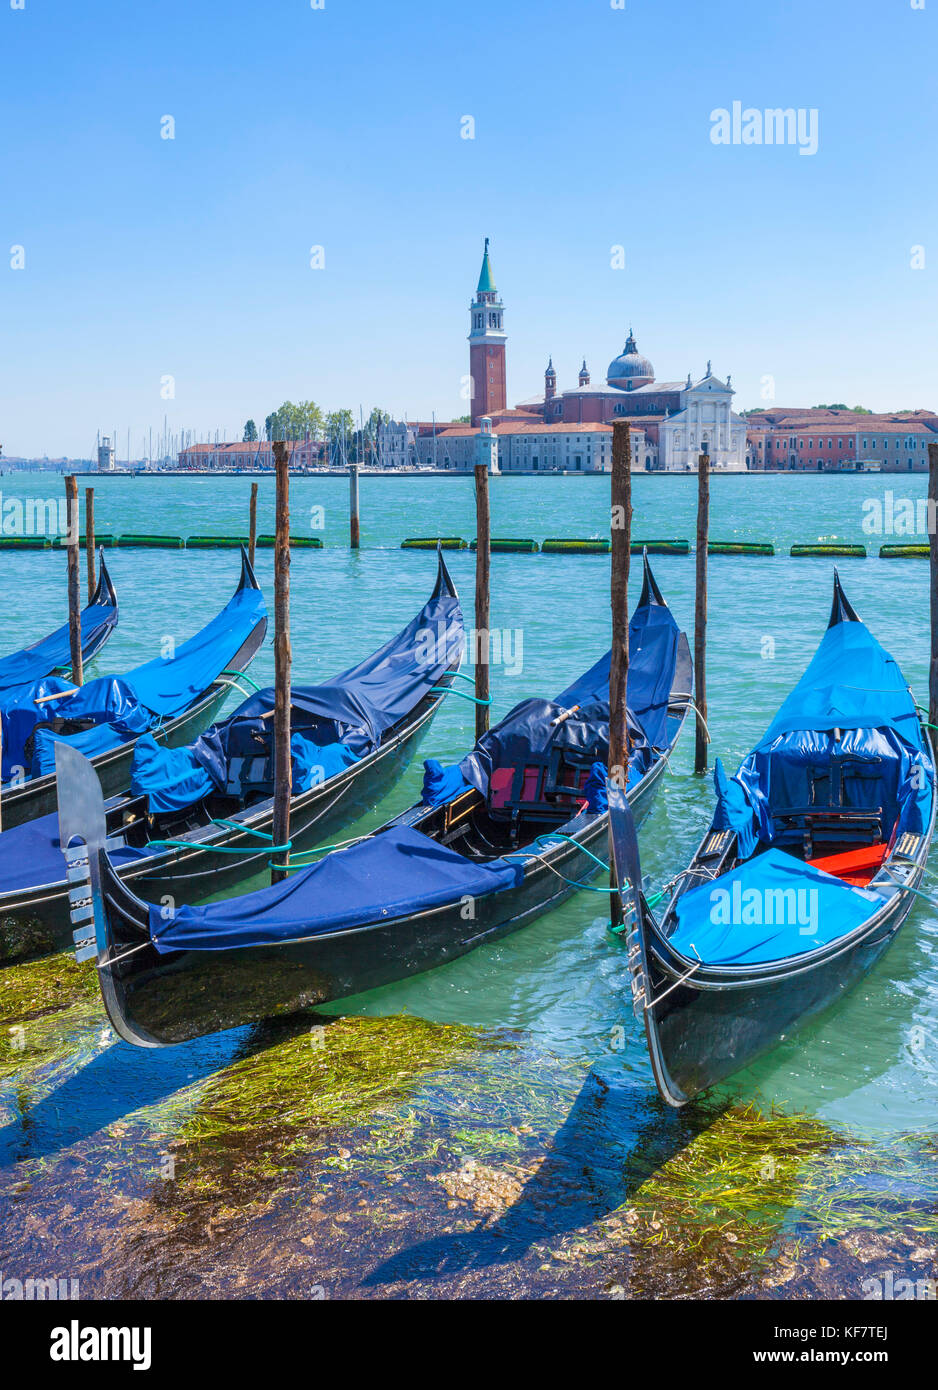 Italy venice italy moored gondolas on the Grand Canal Venice opposite the Island of San Giorgio Maggiore Venice italy eu europe Stock Photo